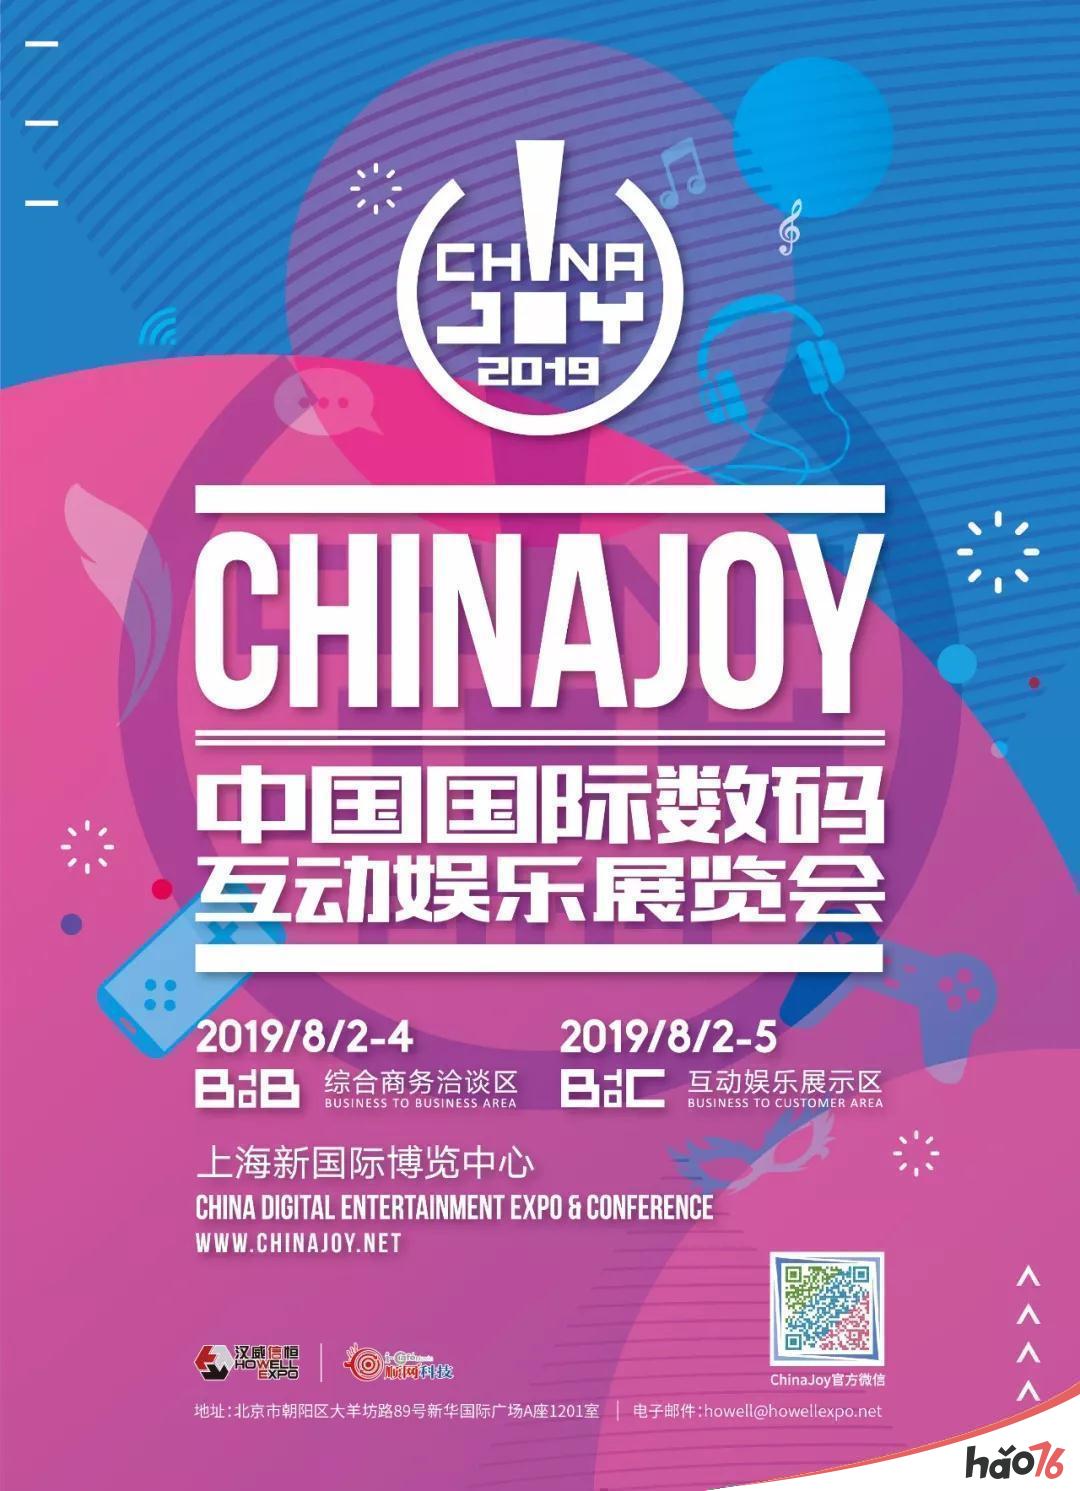 Paymentwall助力中国游戏公司出海，将携旗下Terminal3和FasterPay亮相2019 ChinaJoy